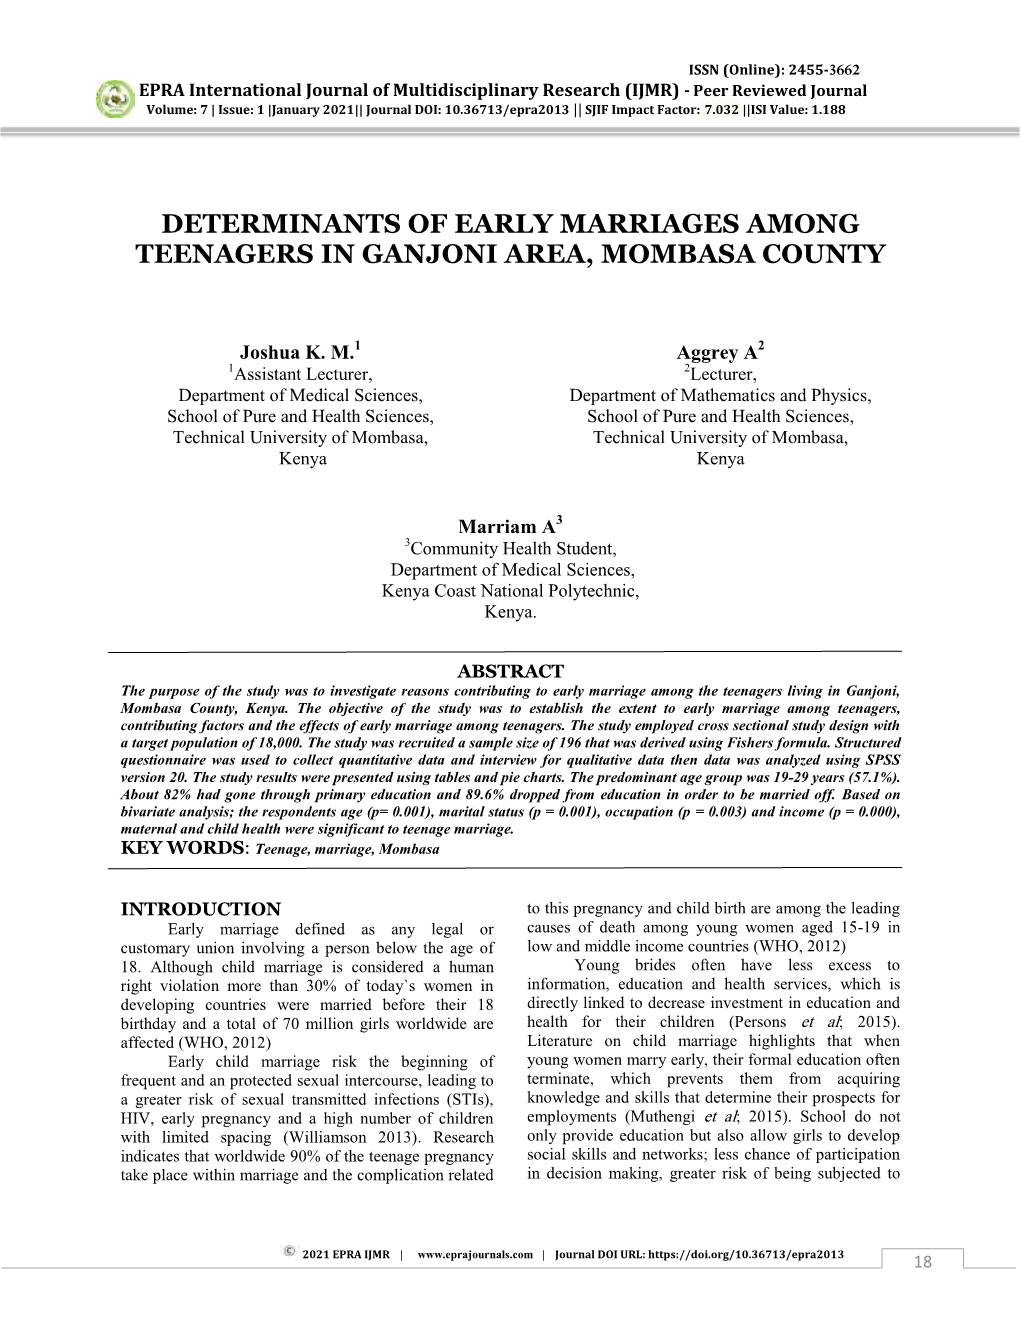 Determinants of Early Marriages Among Teenagers in Ganjoni Area, Mombasa County